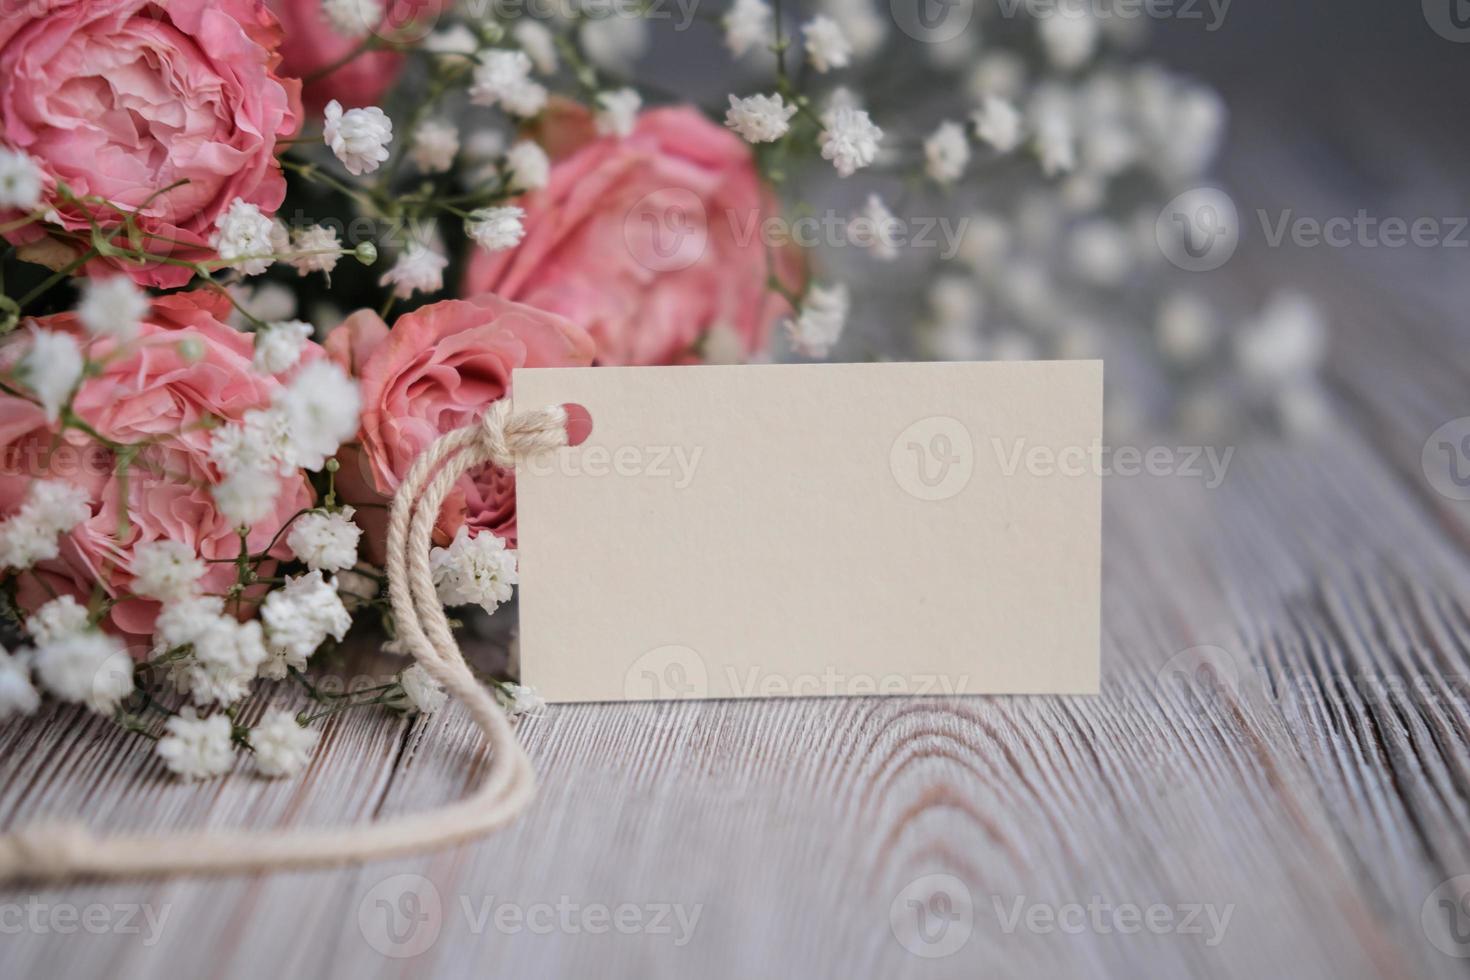 ramo de flores y tarjeta blanca en blanco para texto. etiqueta de maqueta. tarjeta postal foto